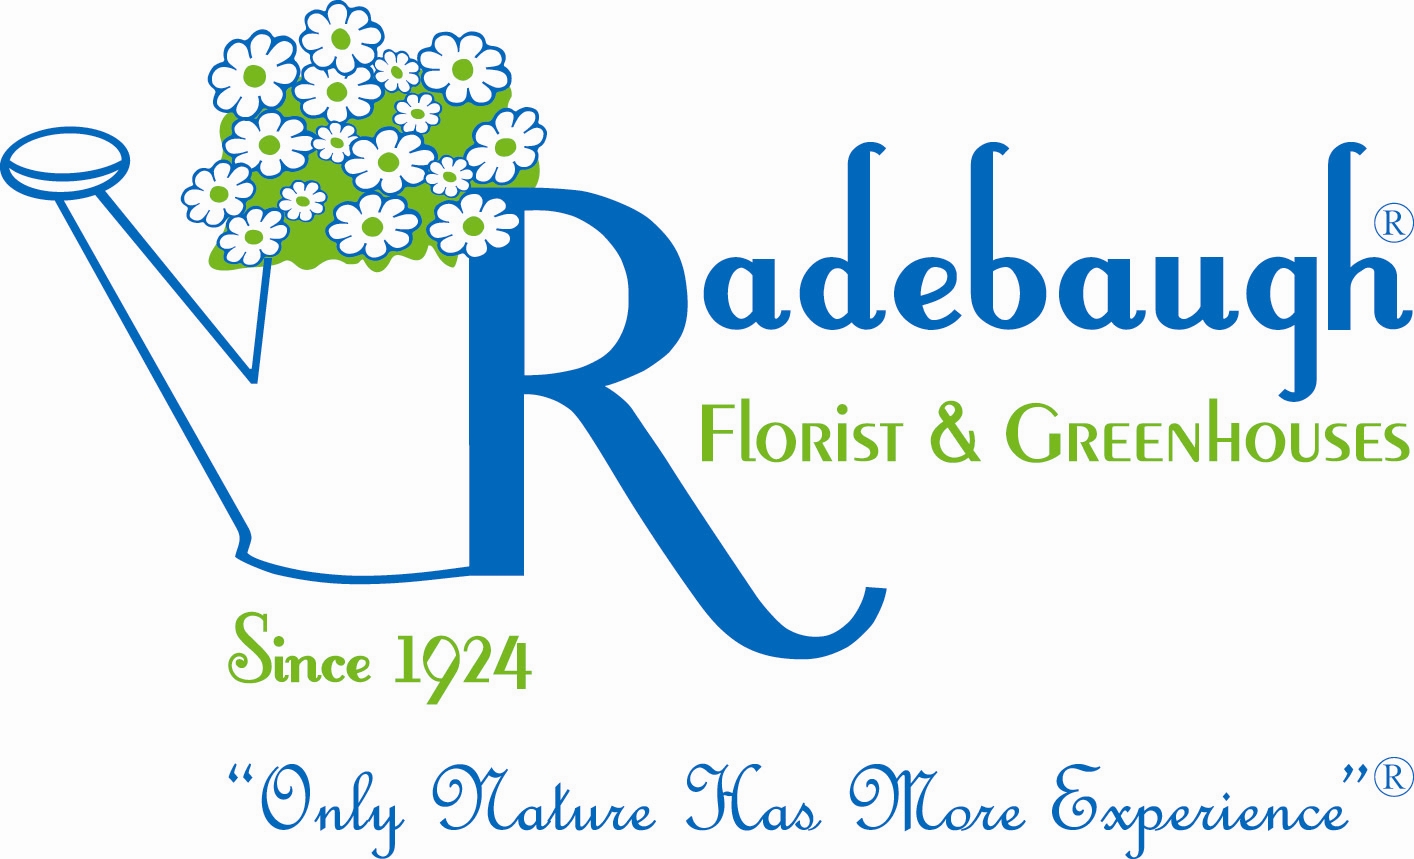 Radebaugh Florist/Greenhouses logo